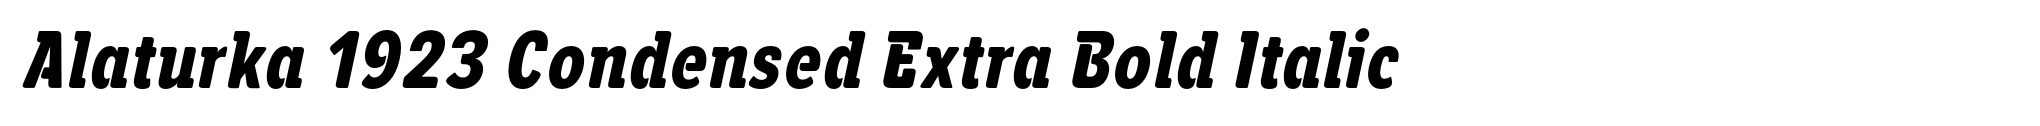 Alaturka 1923 Condensed Extra Bold Italic image